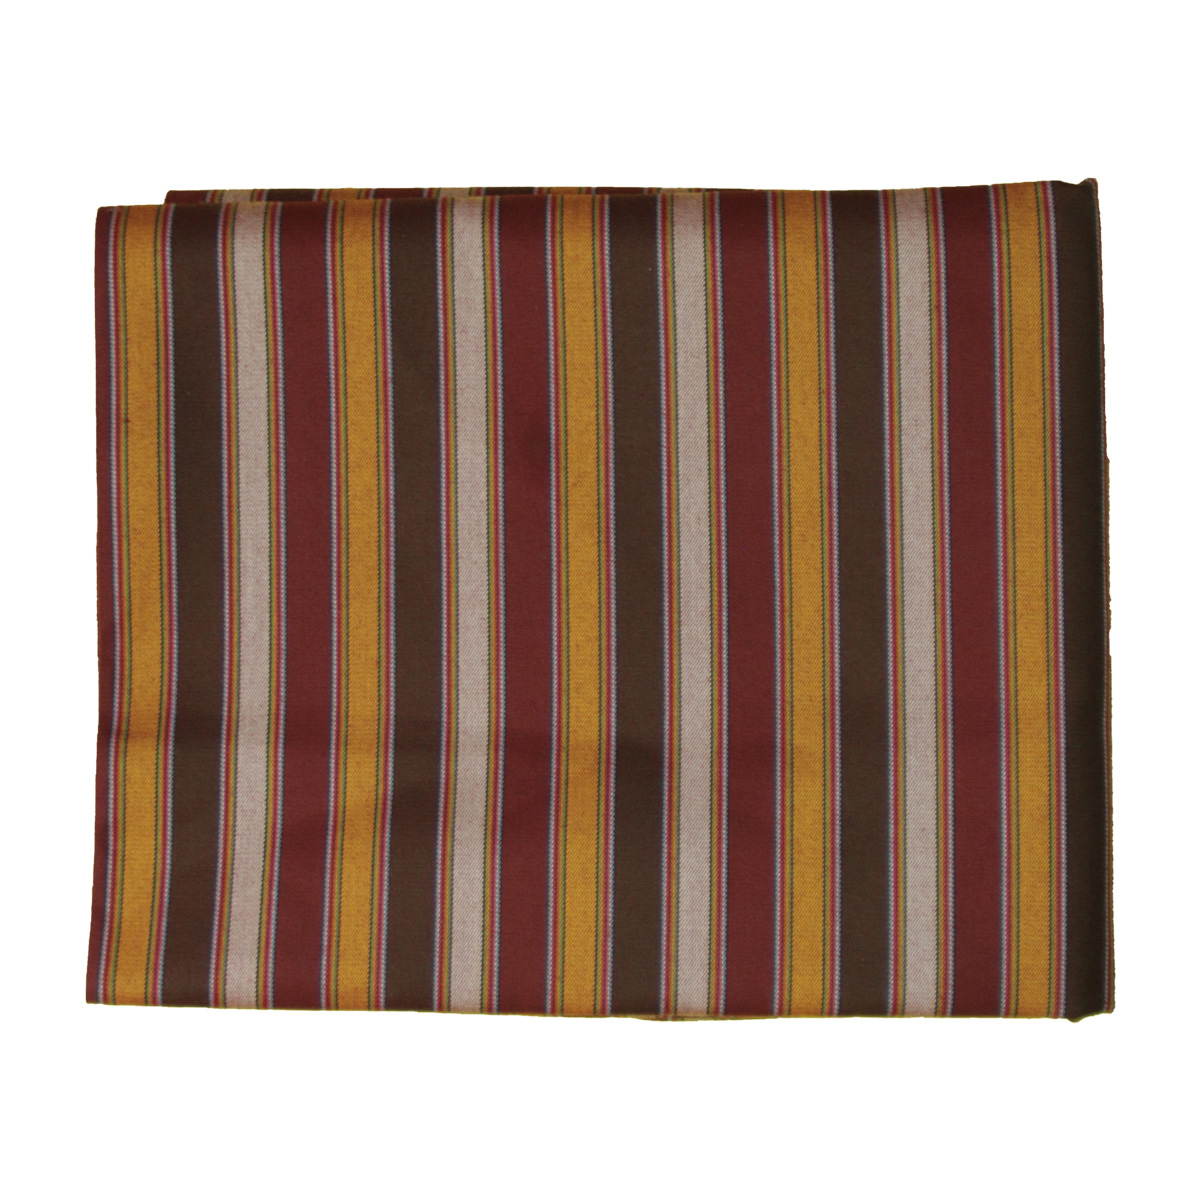 Adang Mathra Gho Fabric,3.5m - Type 1